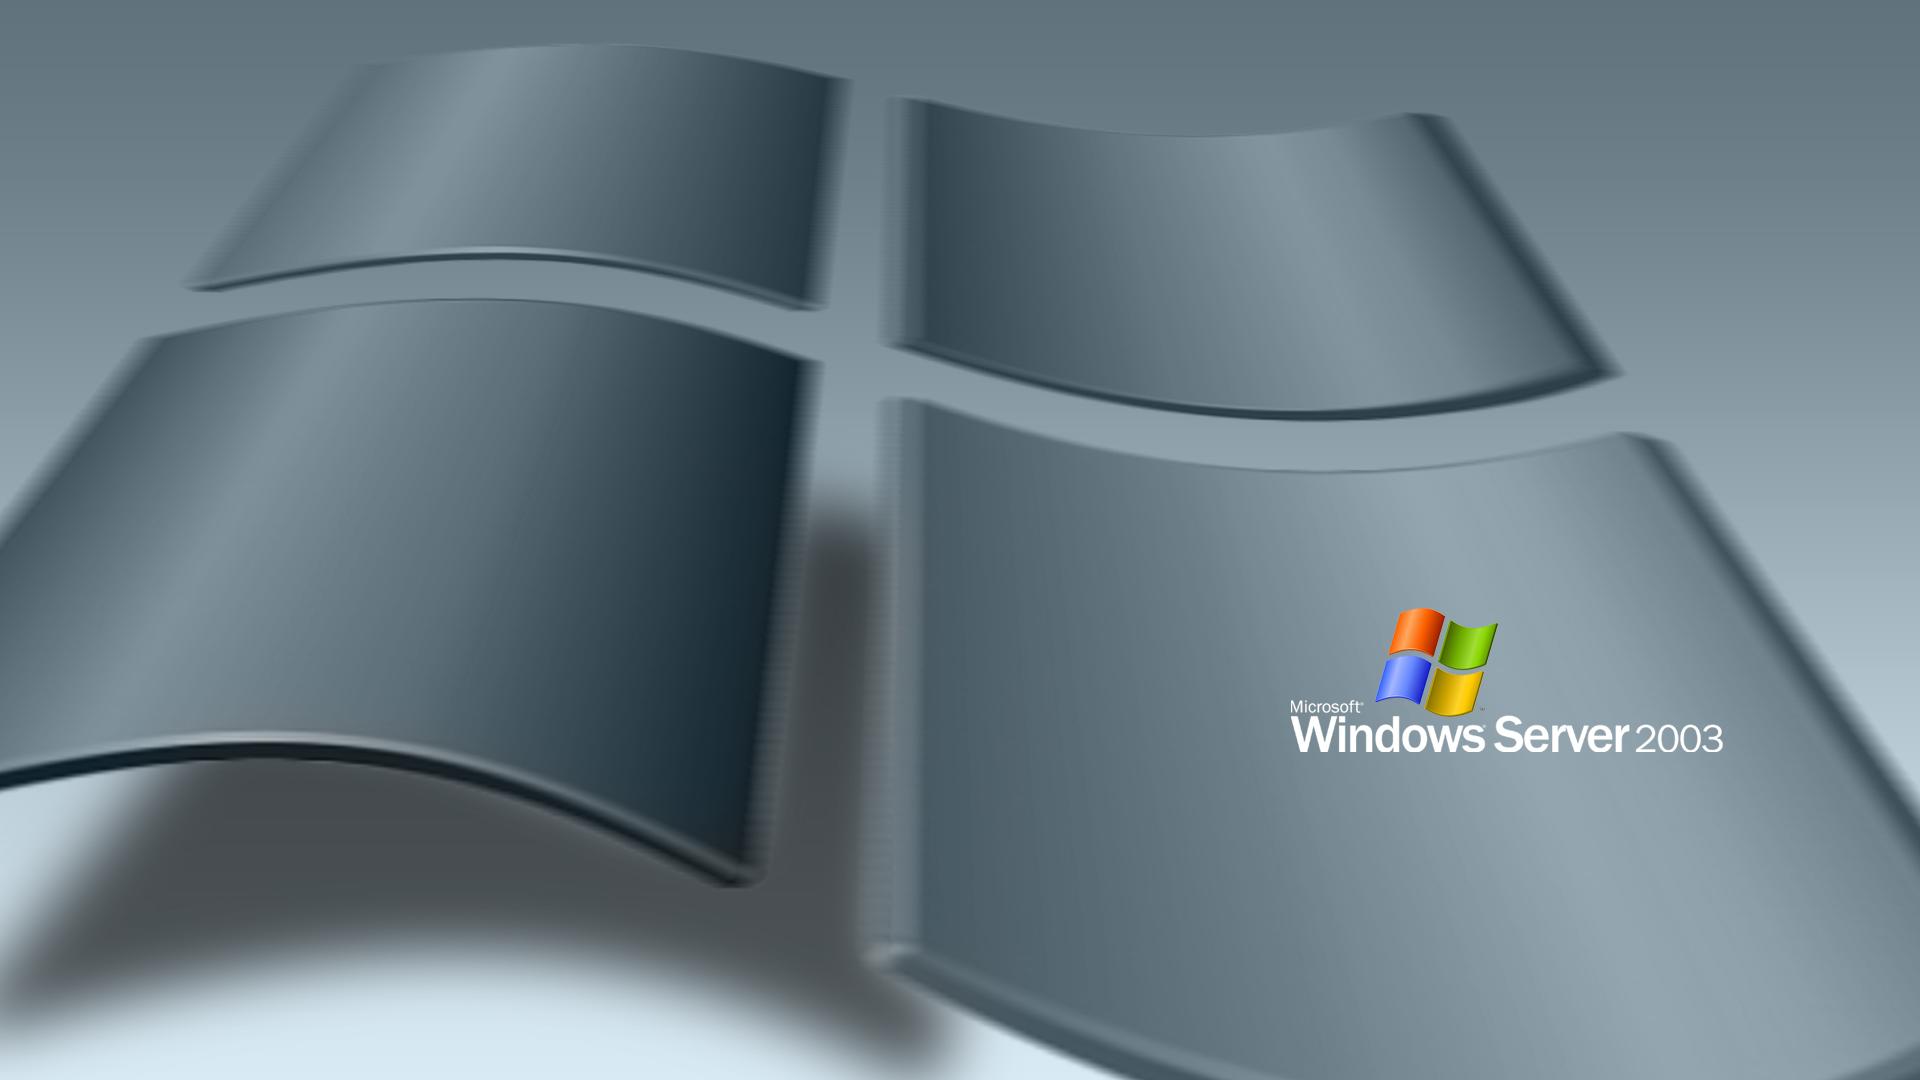 Windows Server 2003, 1920x1080 HD Wallpaper and FREE Stock Photo